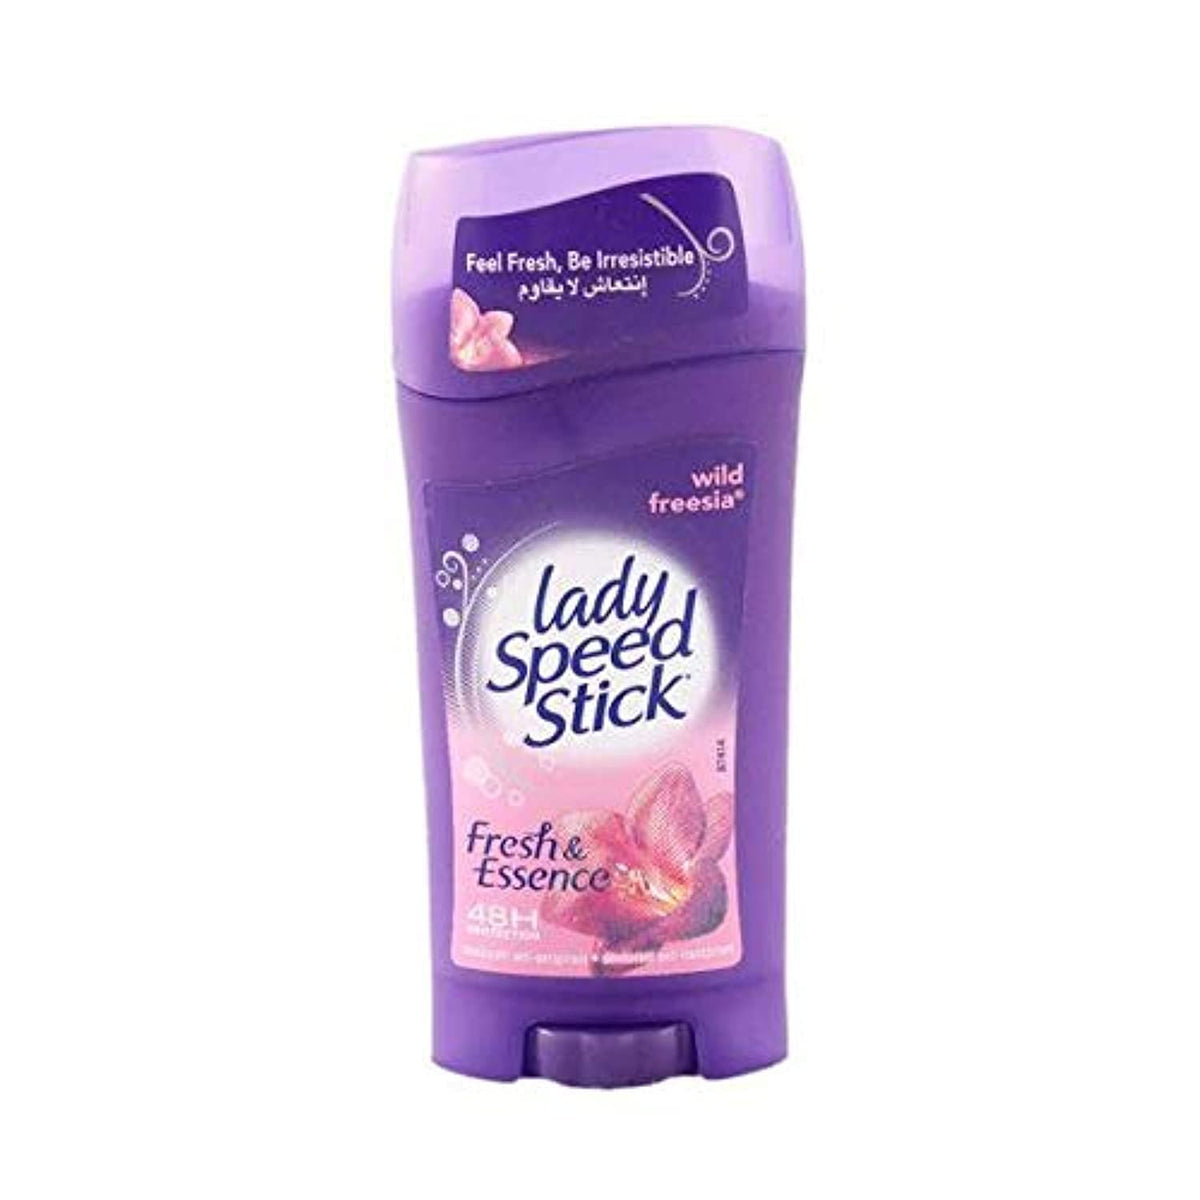 Lady Speed Stick Fresh & Essence Deodorant Stick Wild Freesia - 65g